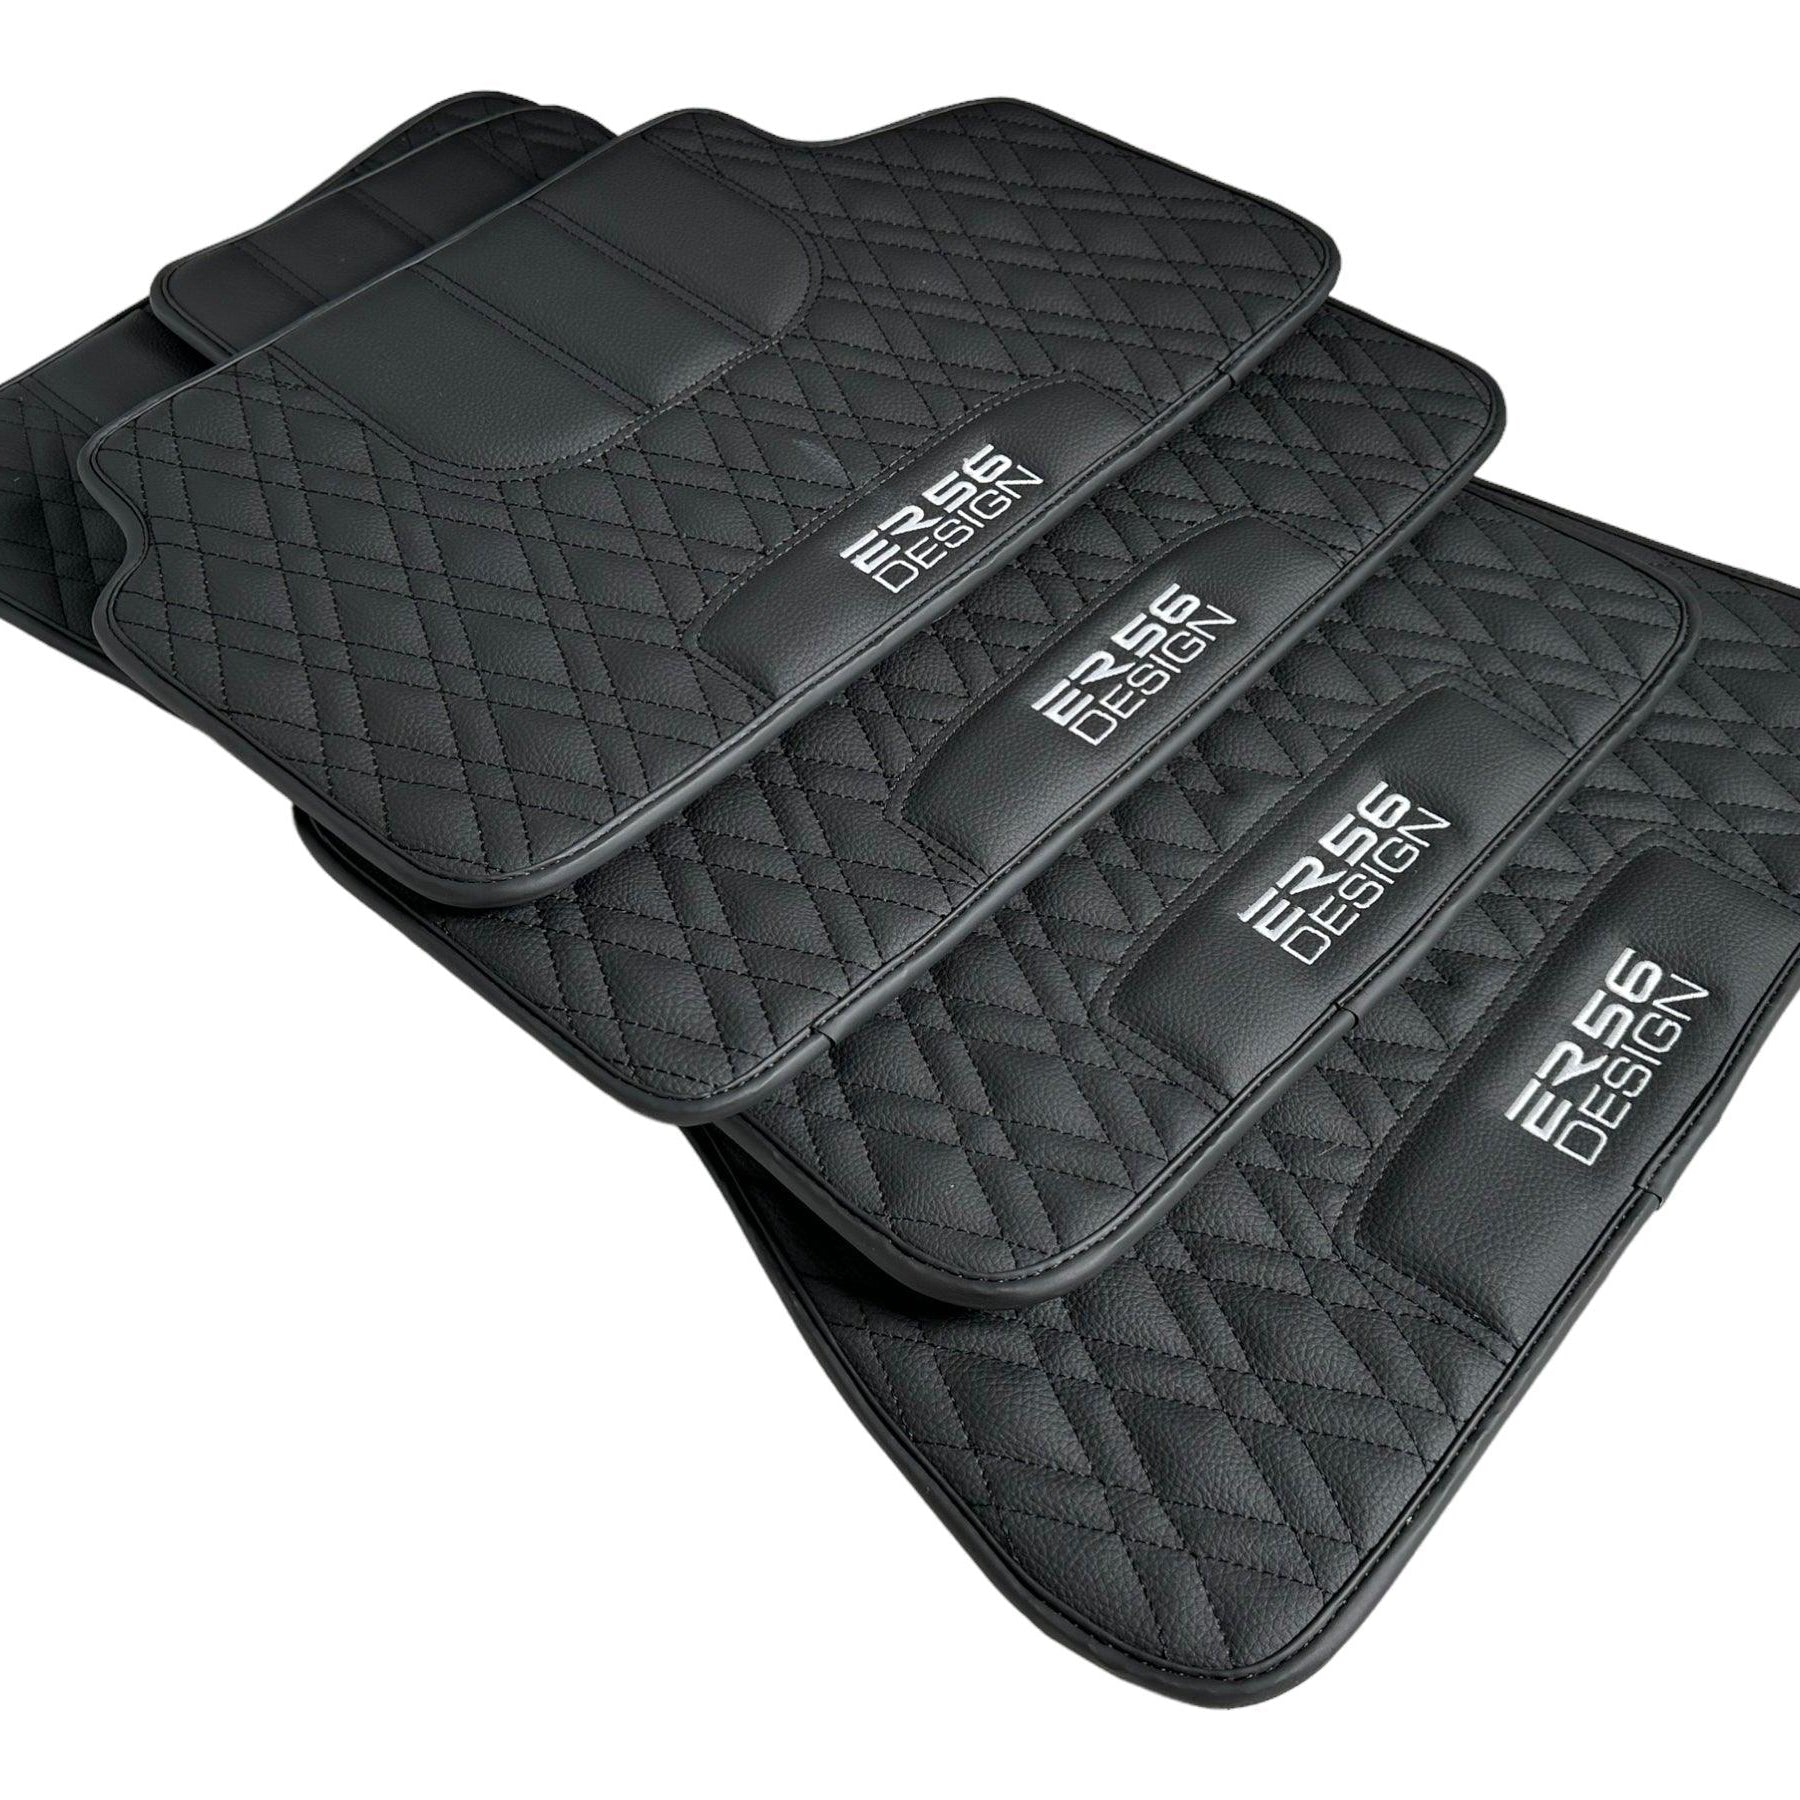 Floor Mats For BMW X6M Series F86 Black Leather Er56 Design - AutoWin